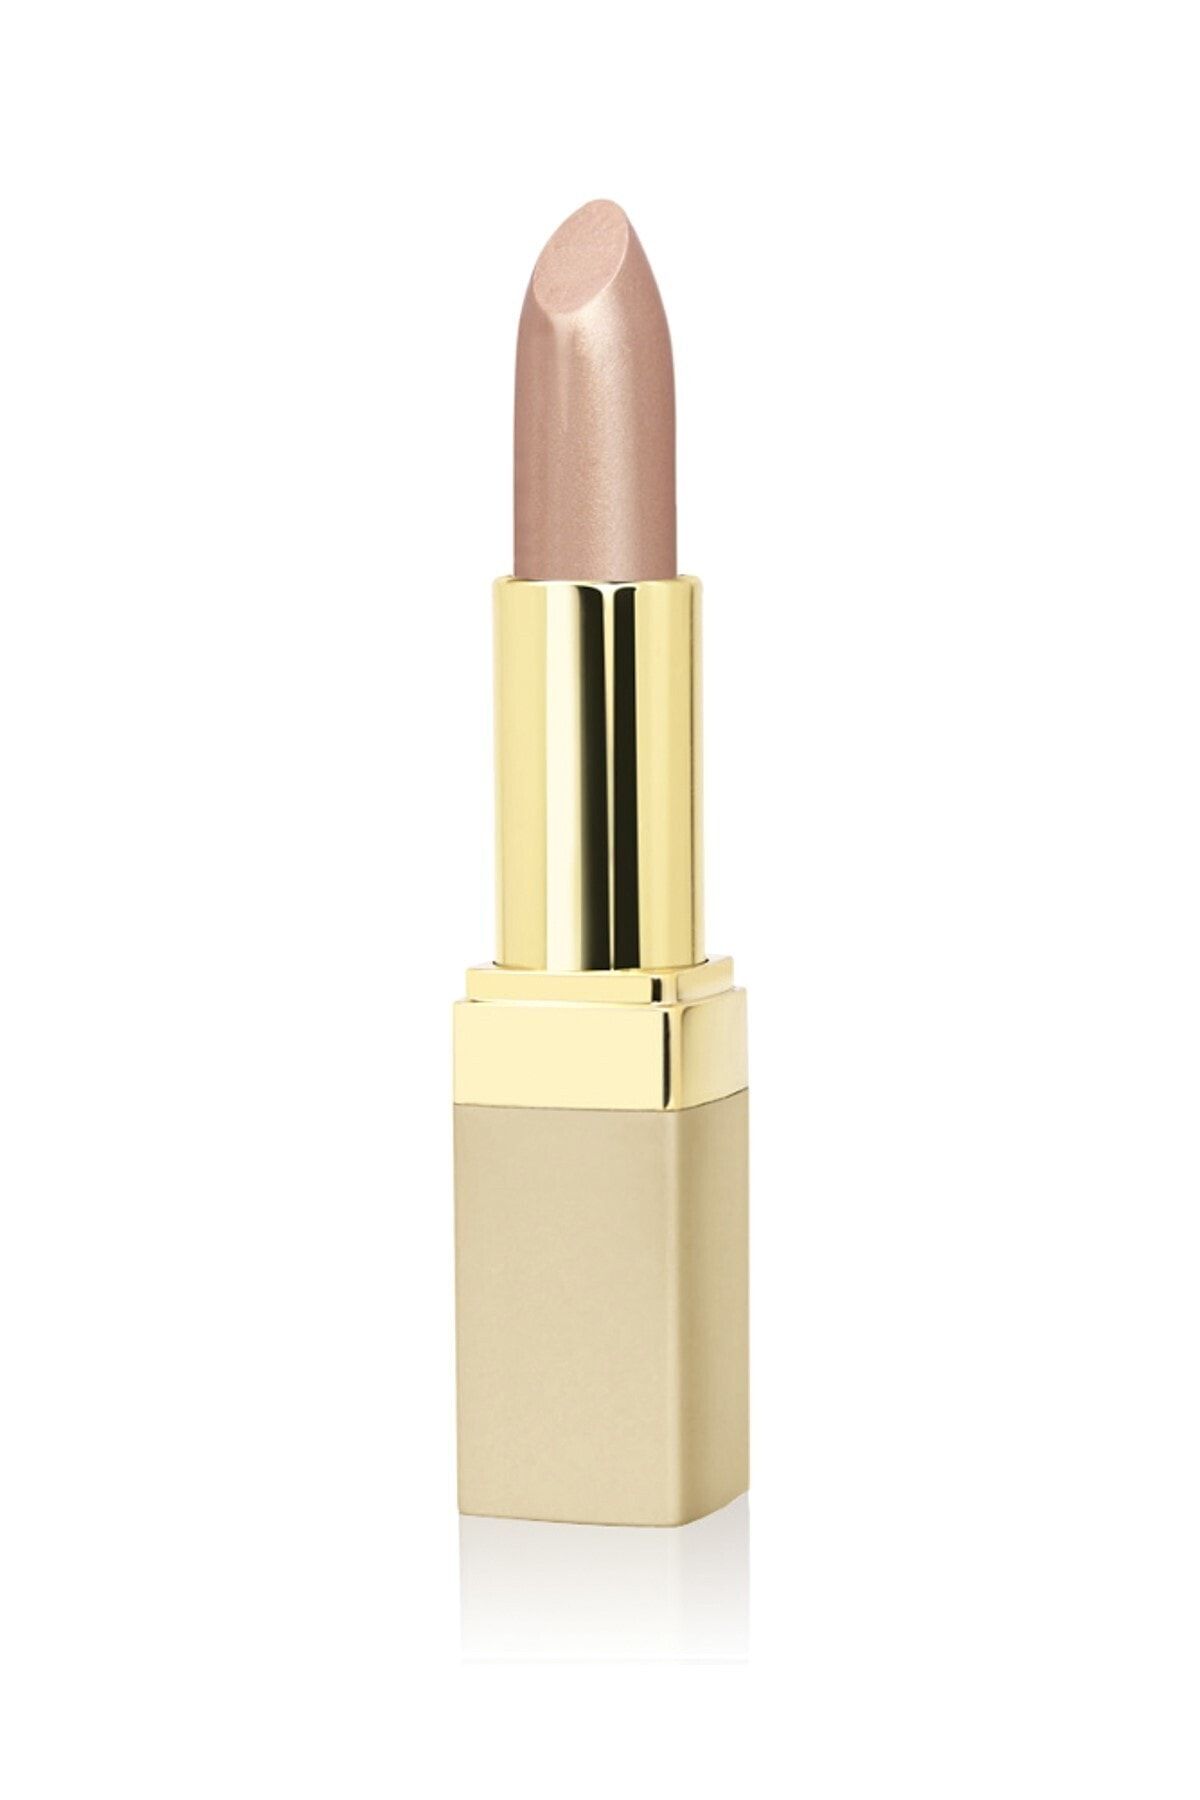 Golden Rose Metalik Ruj - Ultra Rich Color Lipstick No: 02 8691190000028